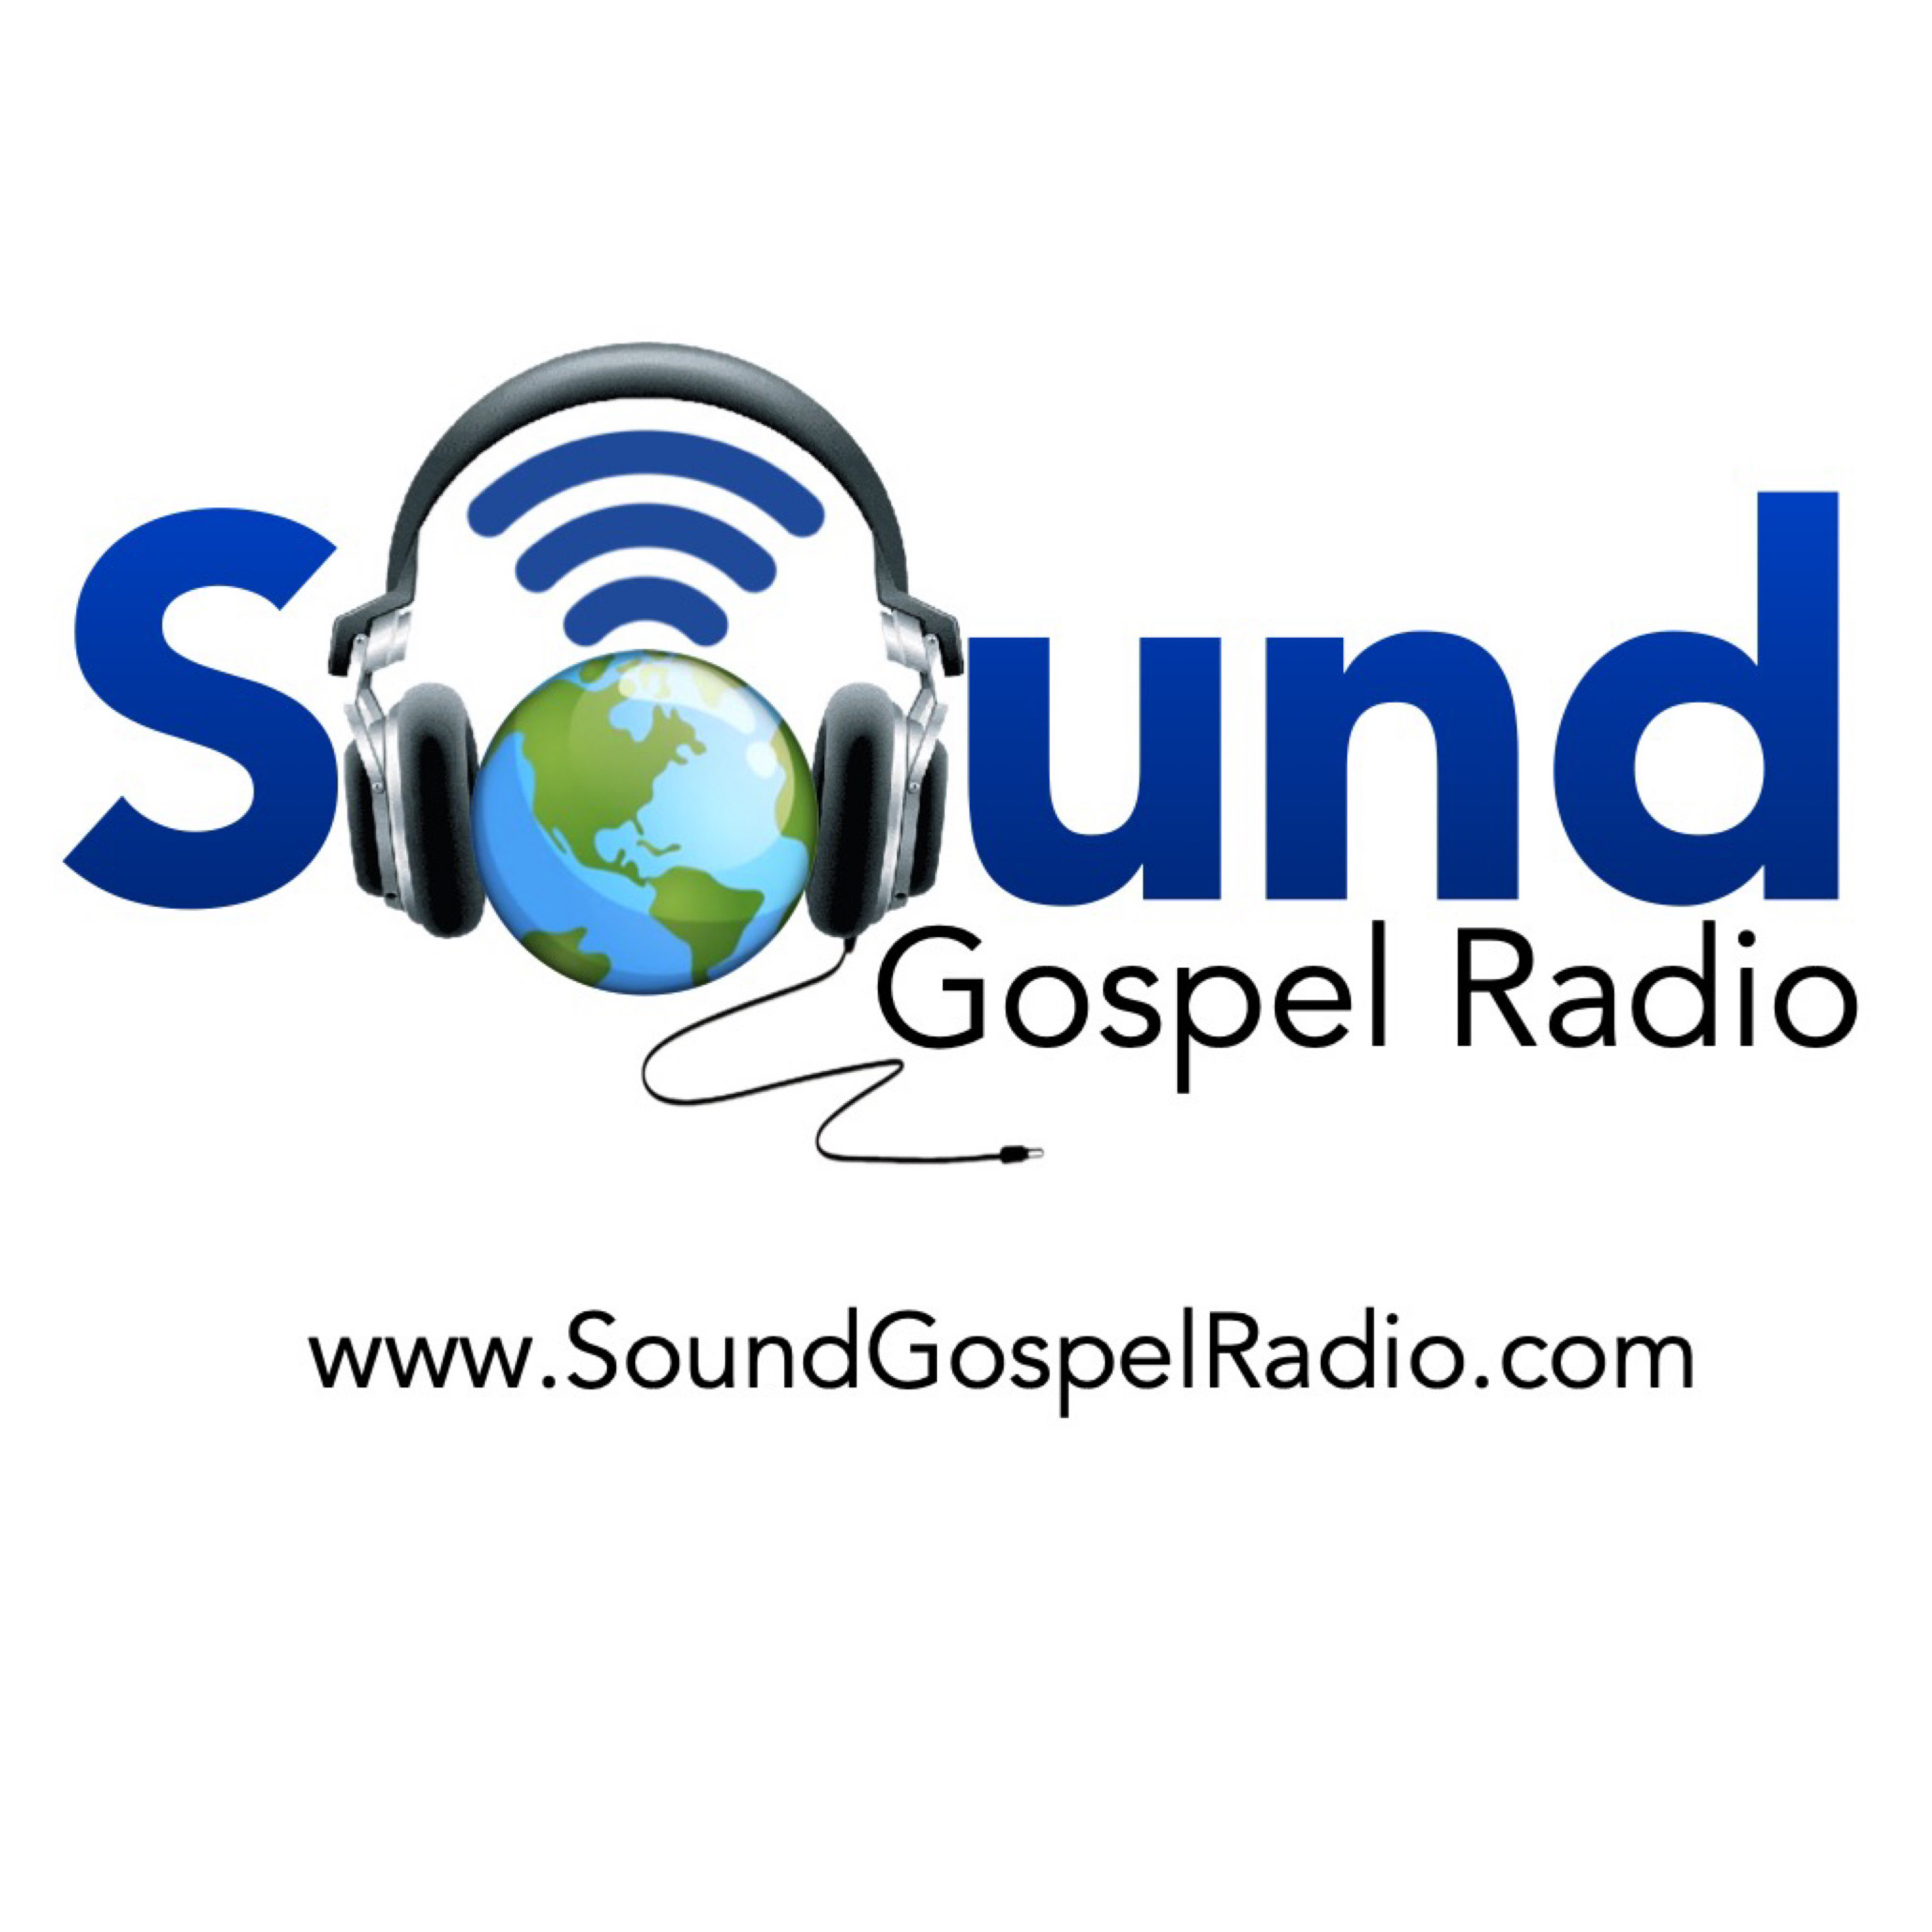 Art for You're Listening To Sound Gospel Radio by Sound Gospel Radio